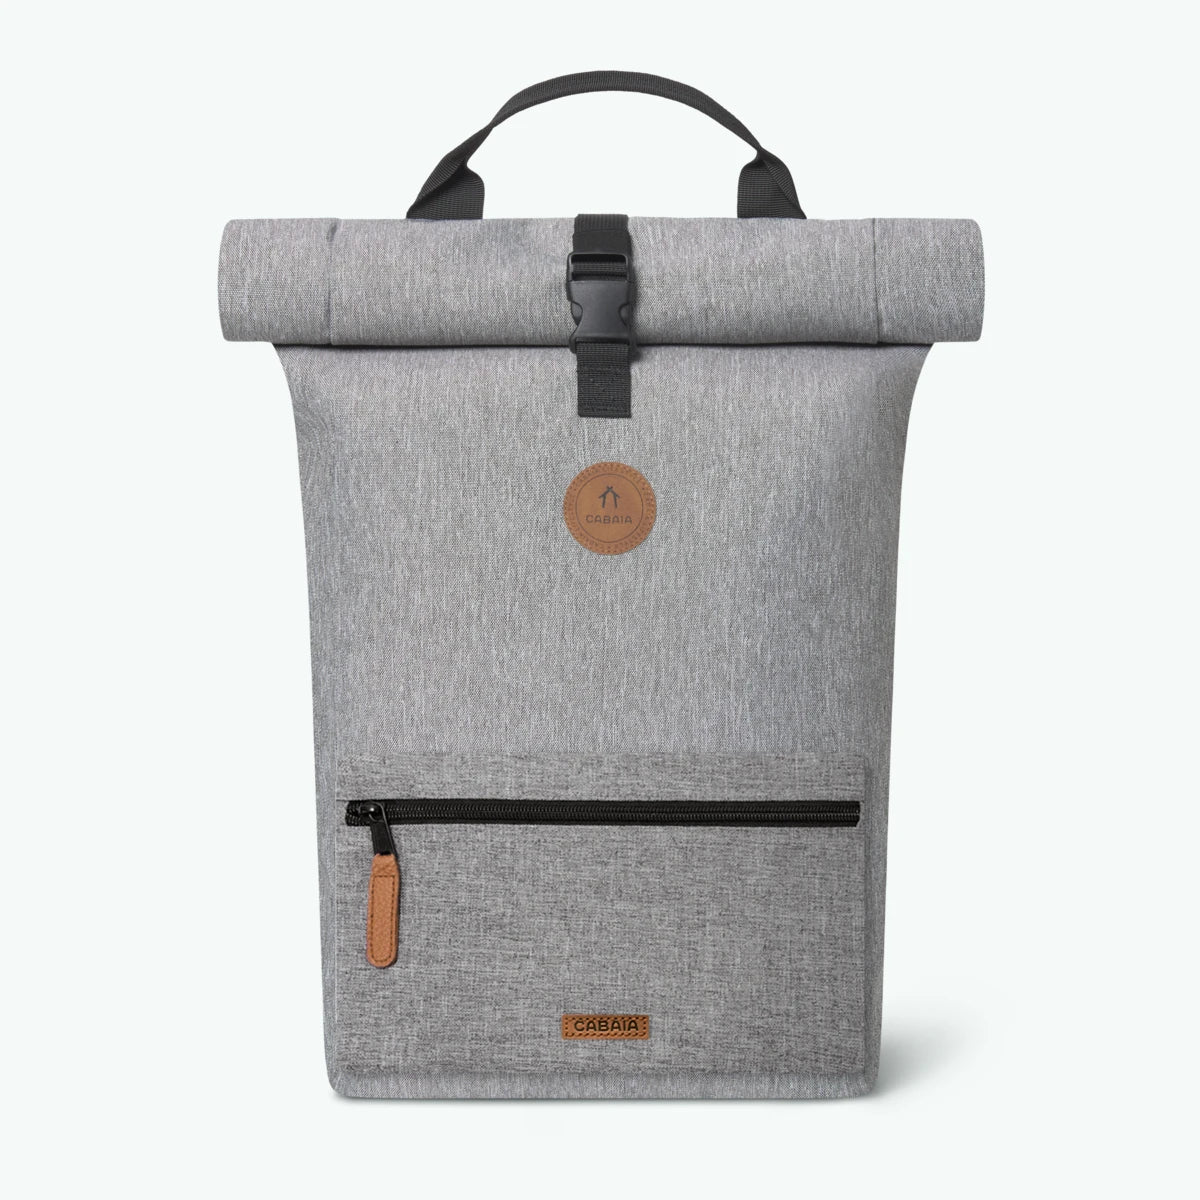 Starter grey - Medium - Backpack - 1 pocket